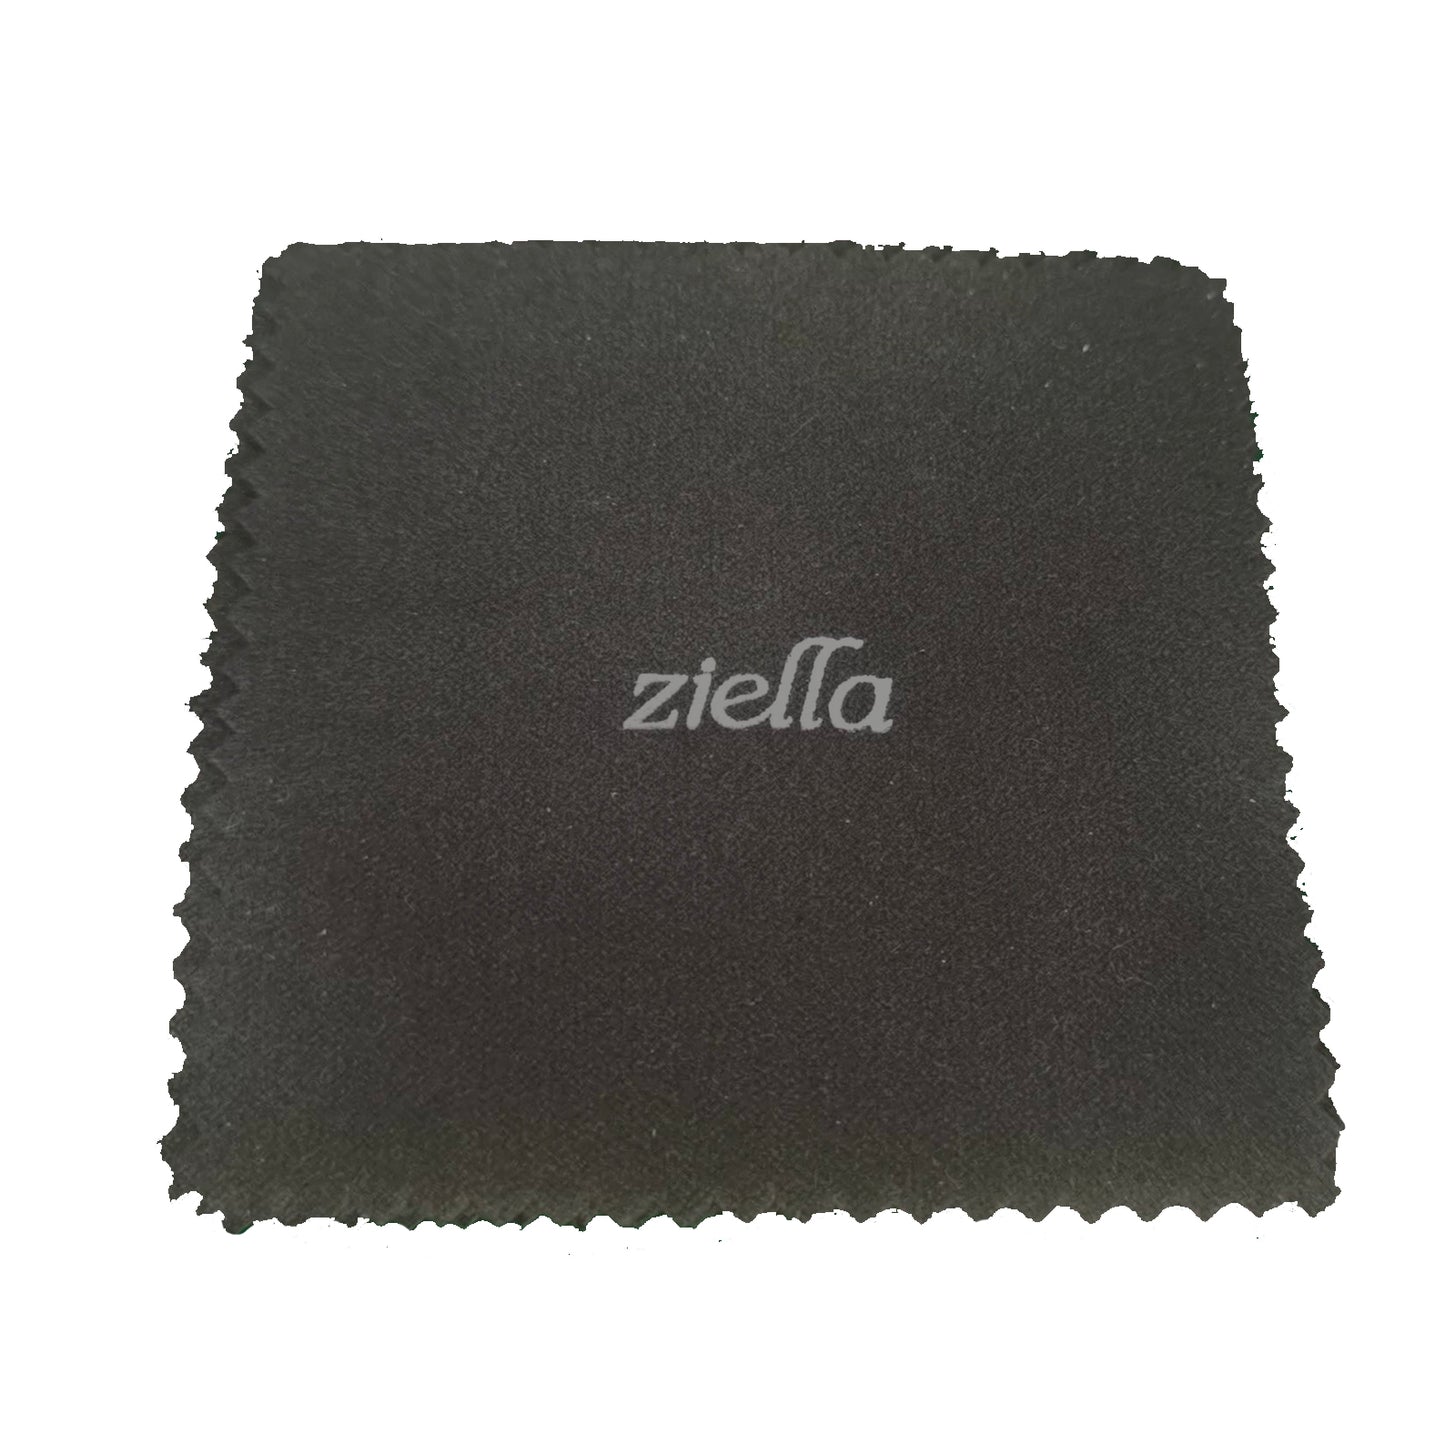 Ziella Jewelry Polishing Cloth